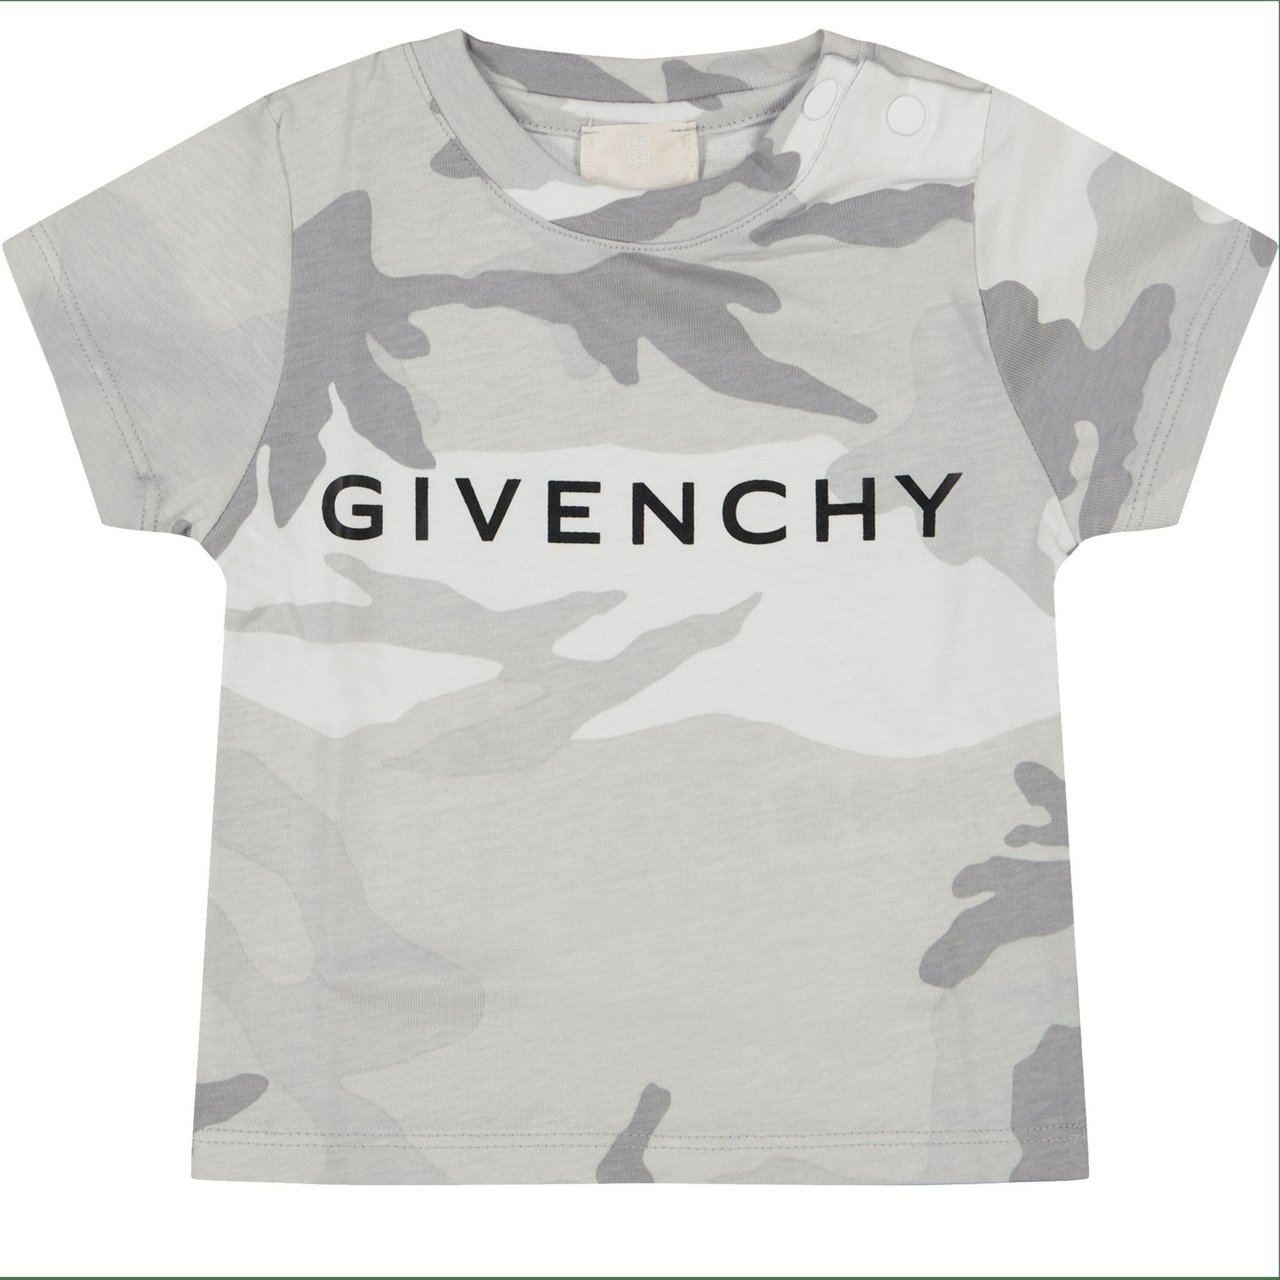 Givenchy Givenchy Baby Jongens T-Shirt Grijs Grijs